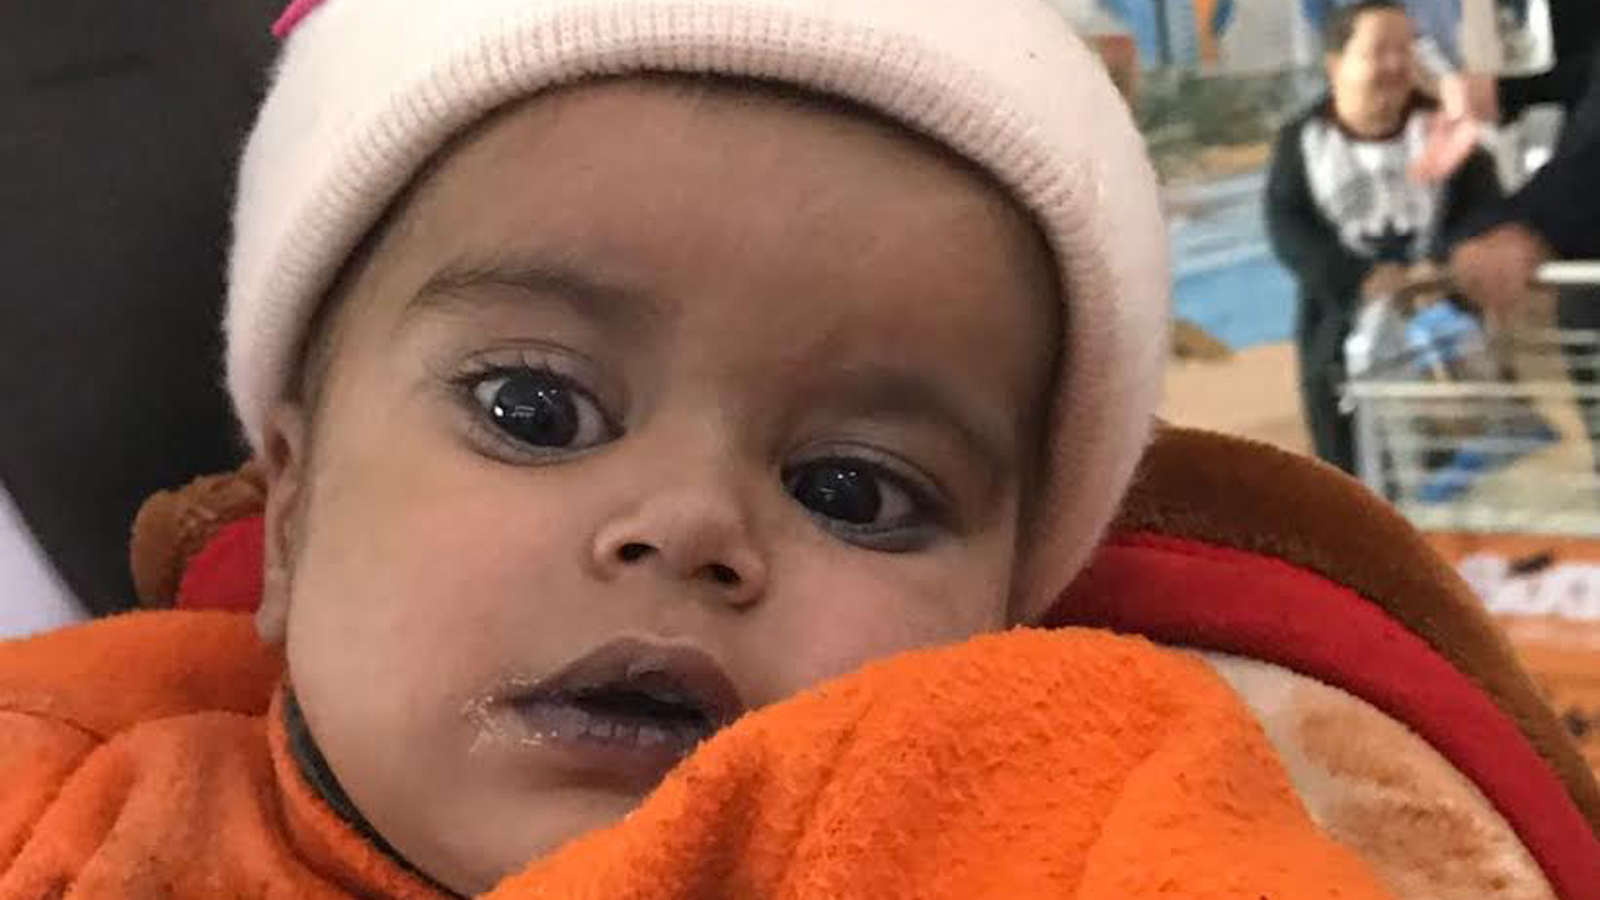 Afghan toddler Yakub received life-saving heart surgery in Israel. Photo via SACH